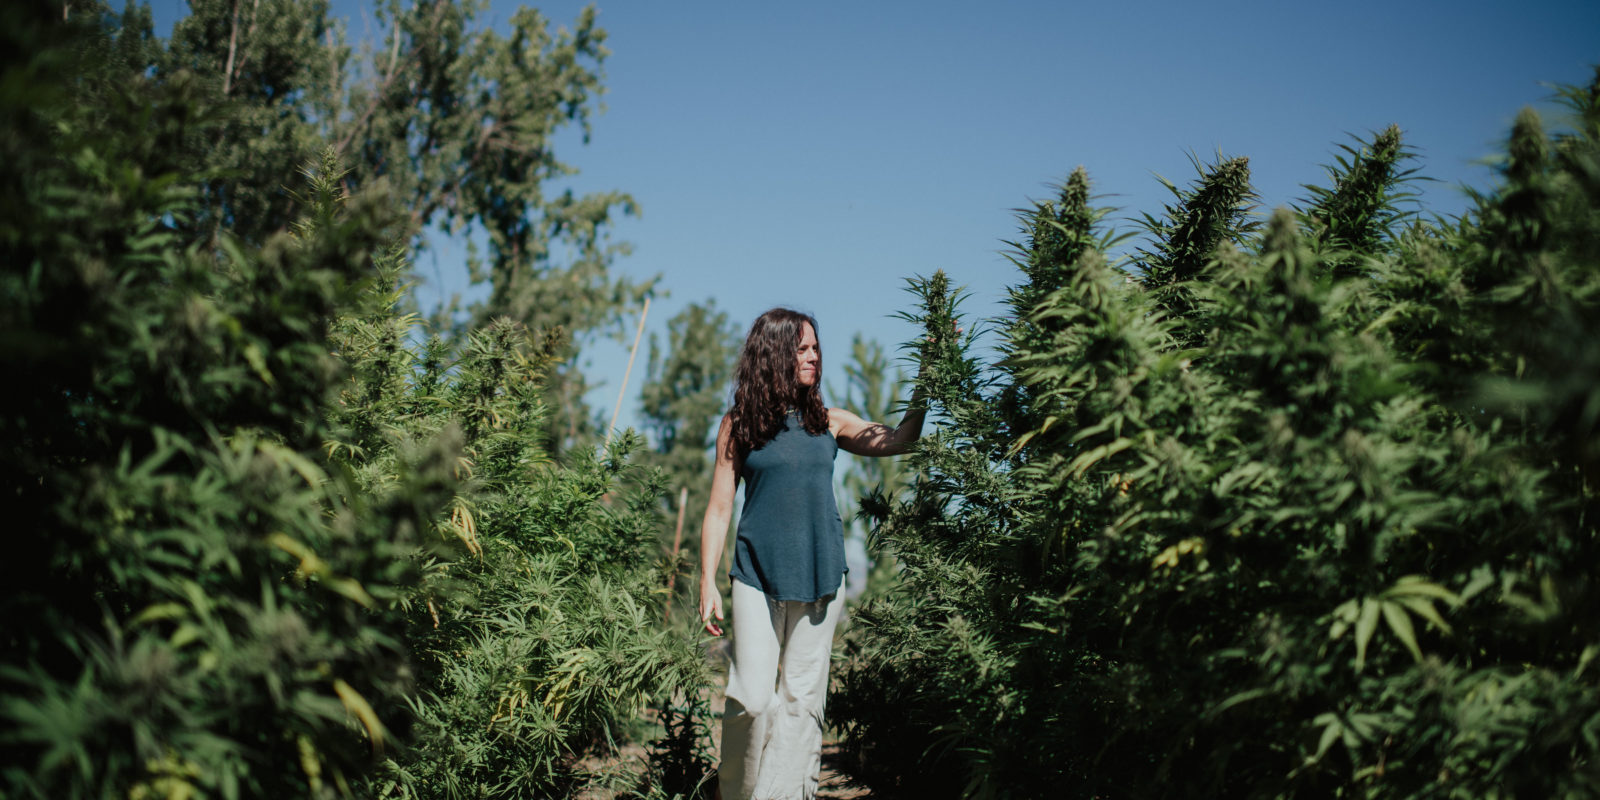 A woman walking through tall green plants